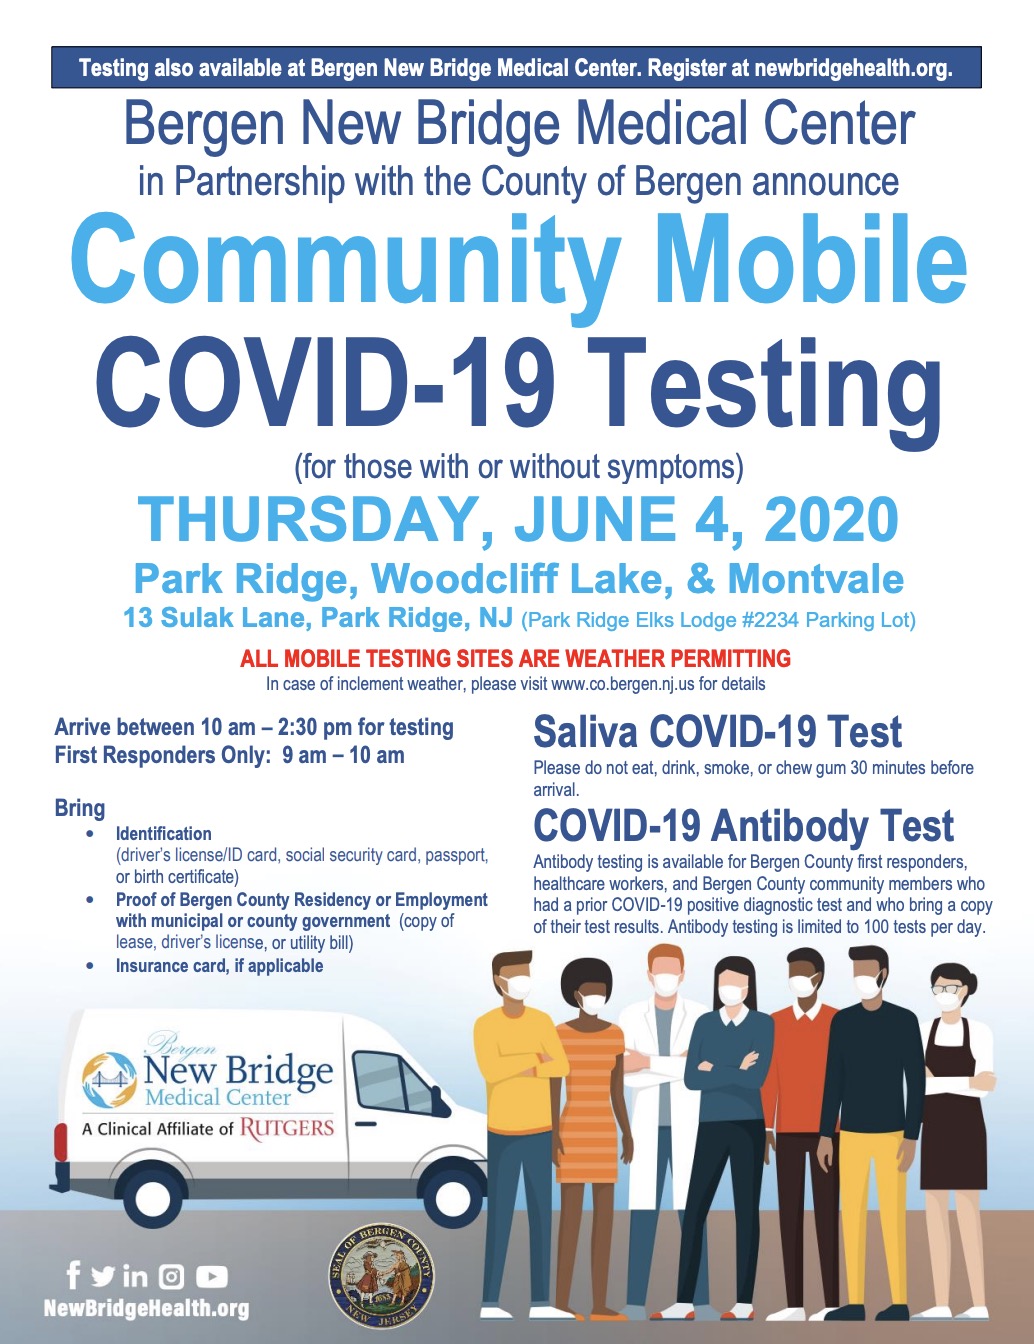 COVID-19 Mobile Testing